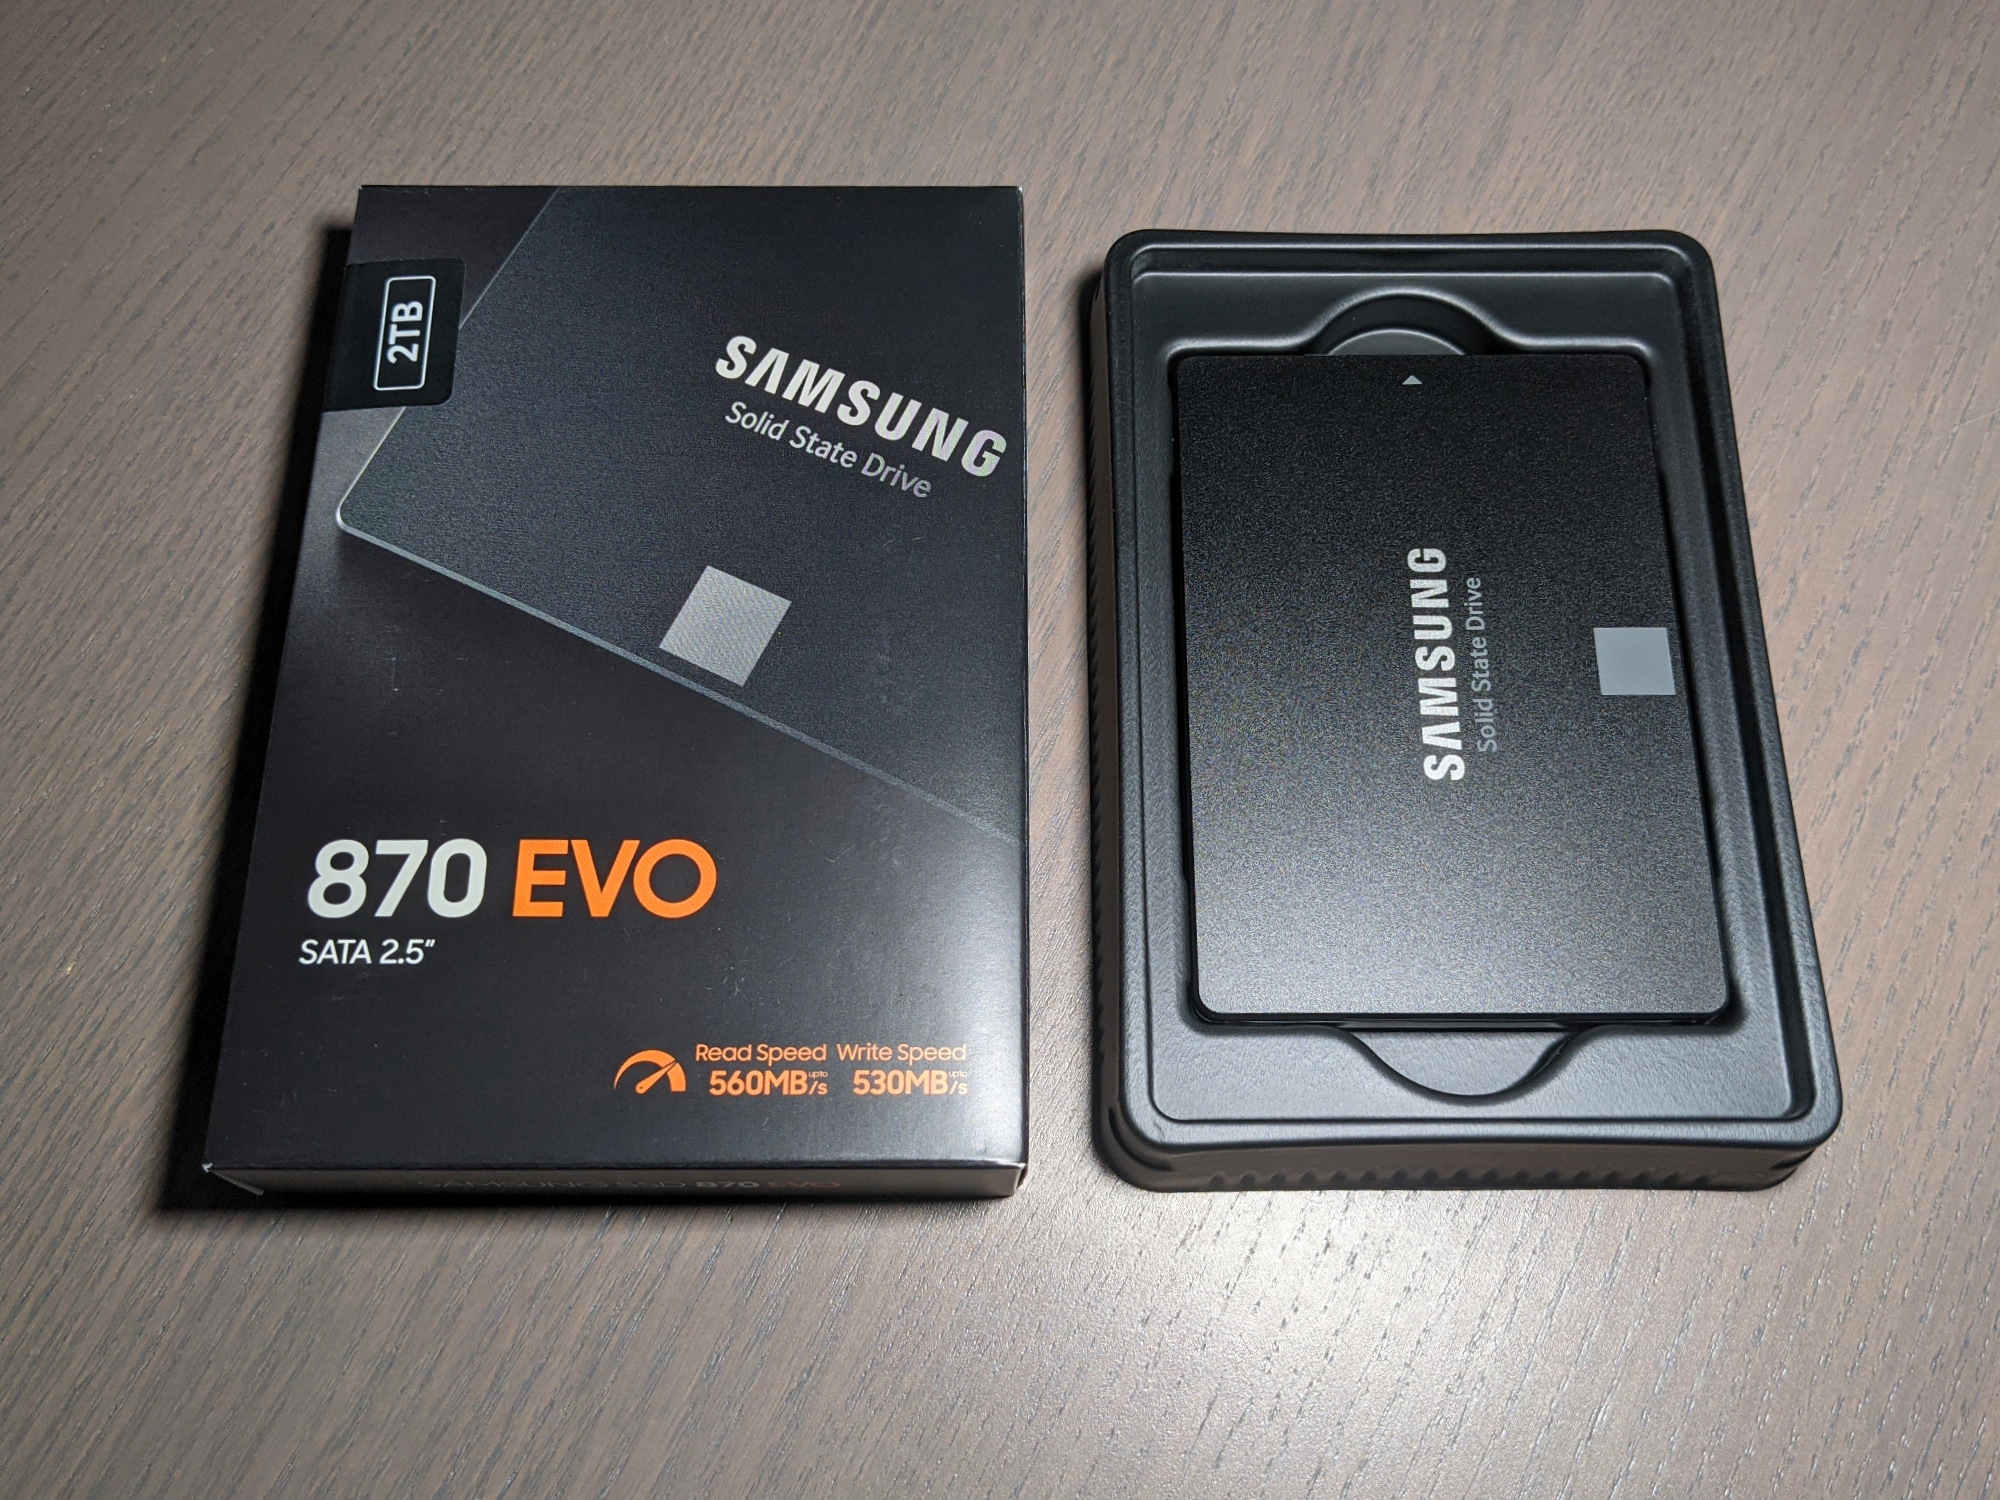 870 EVO - Samsung's latest SATA SSD in review